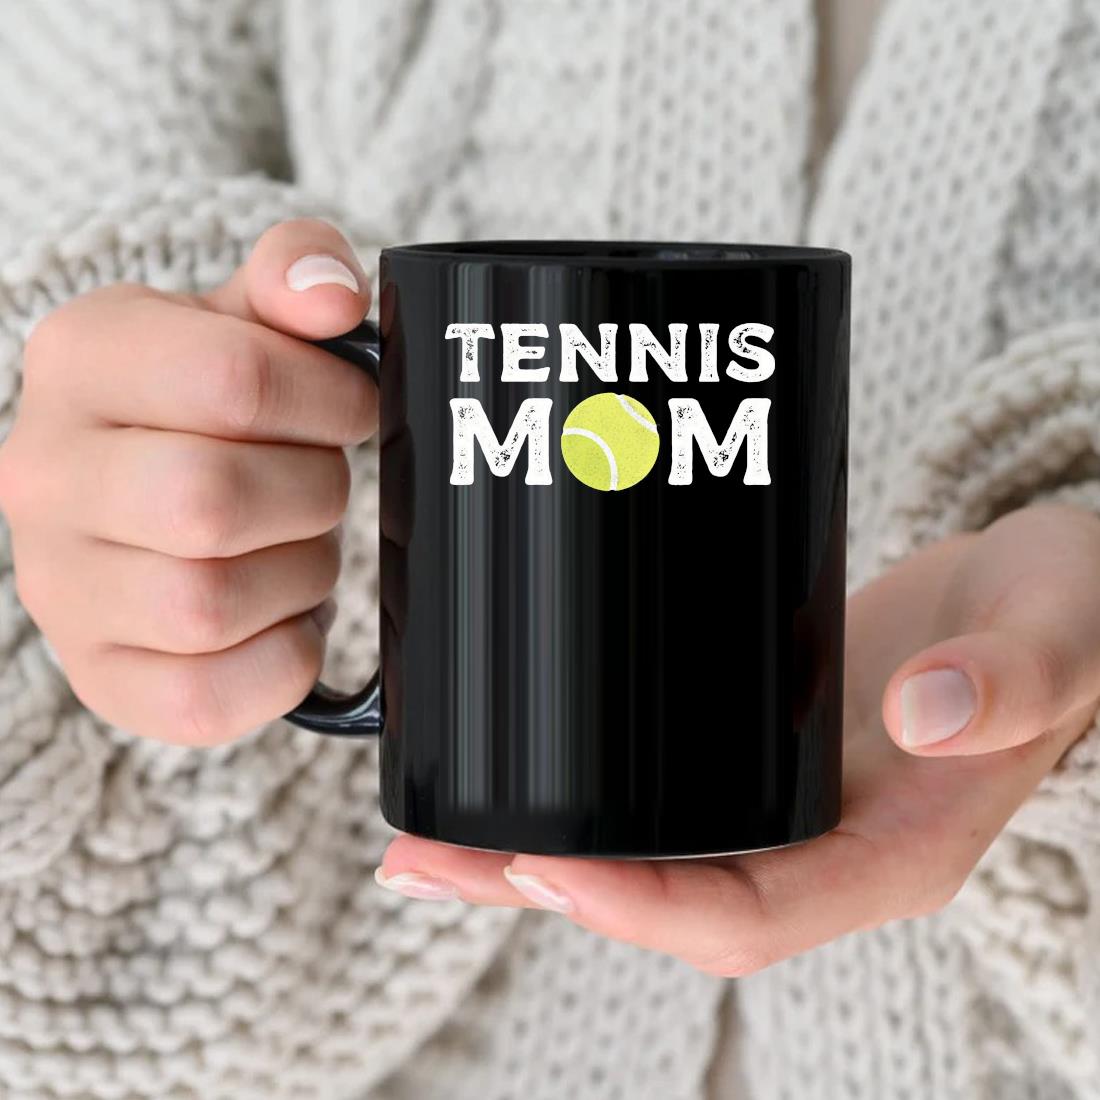 Tennis Mom Tennis Playing Coach Gift Mug nhu